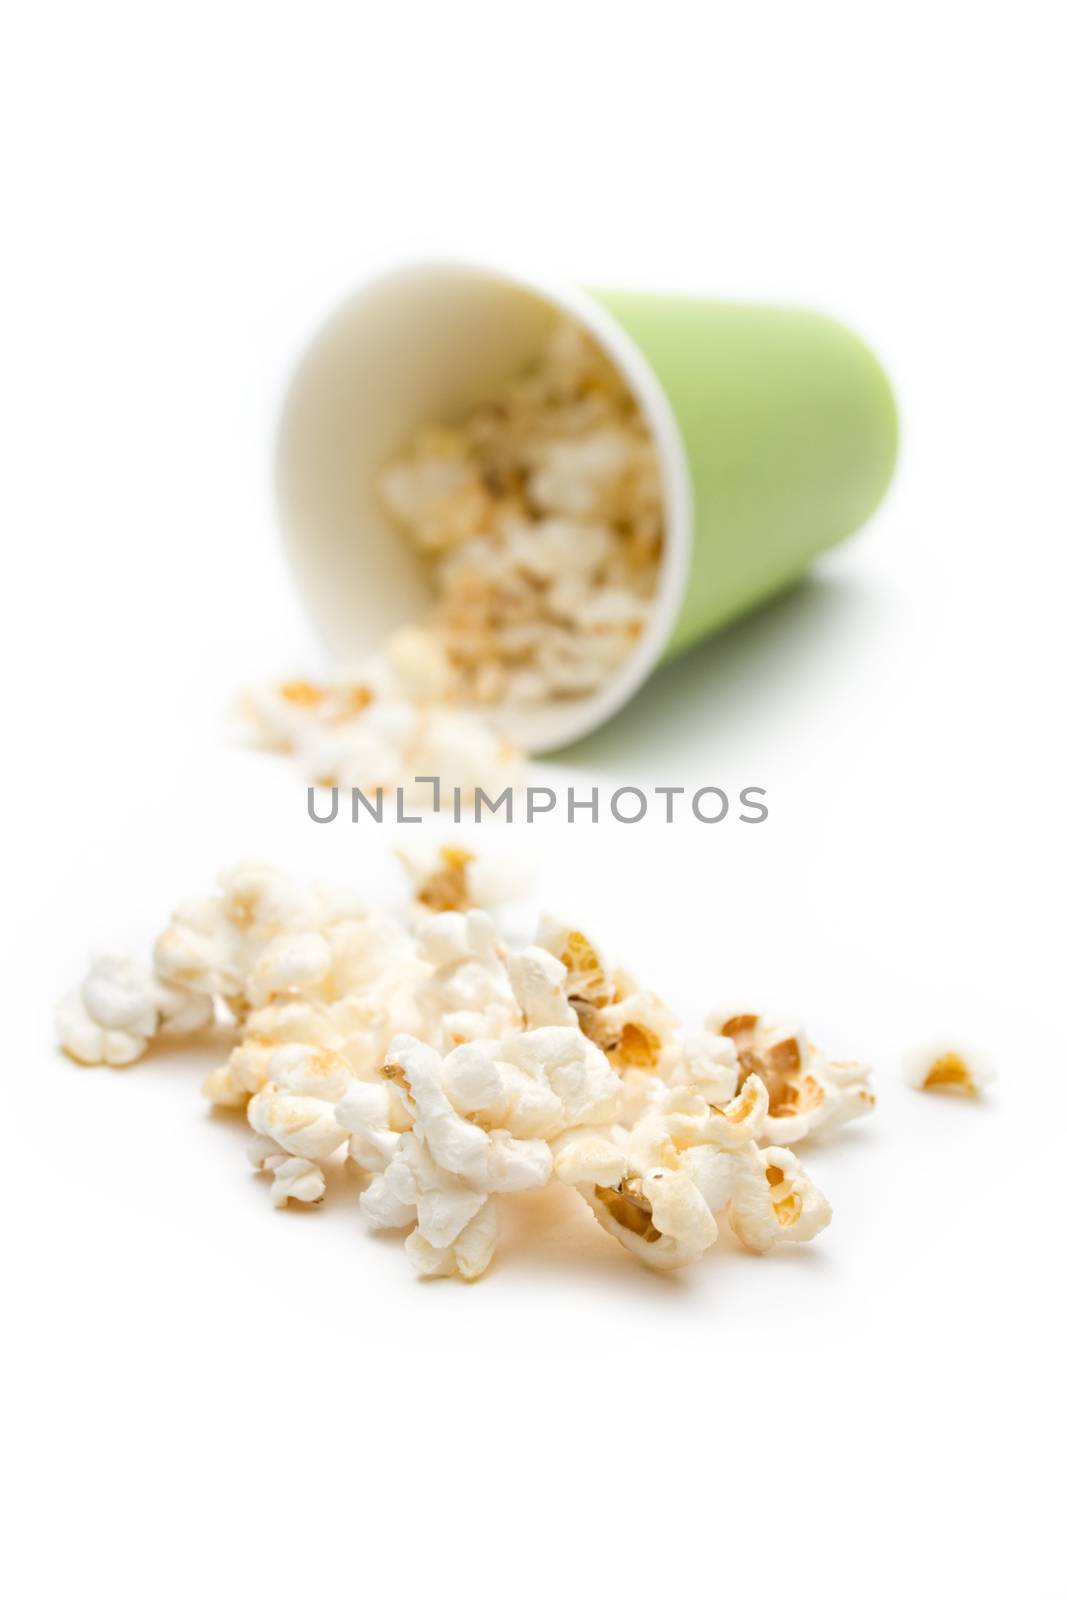 Popcorn in a green paper cup by Garsya